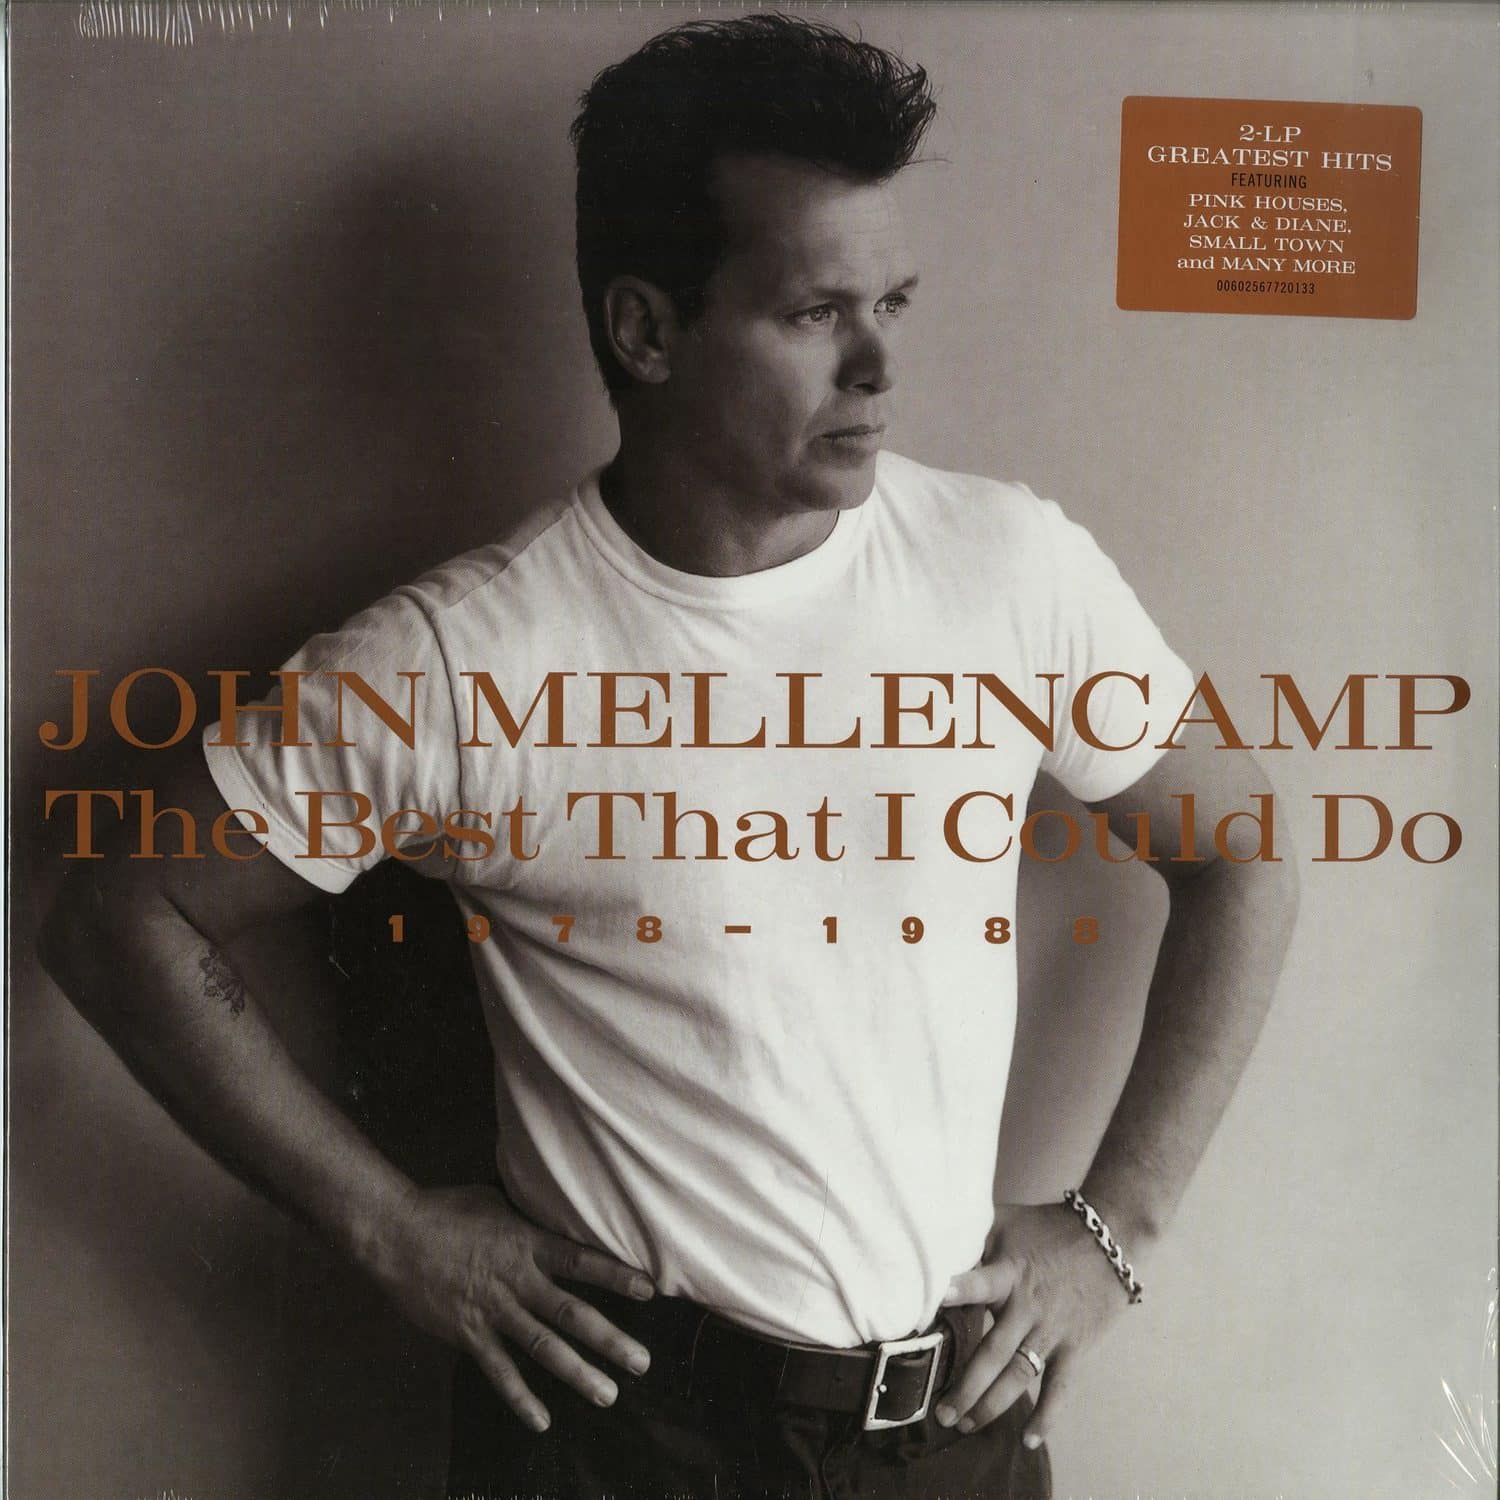 John Mellencamp - THE BEST THAT I COULD DO 1978-88 